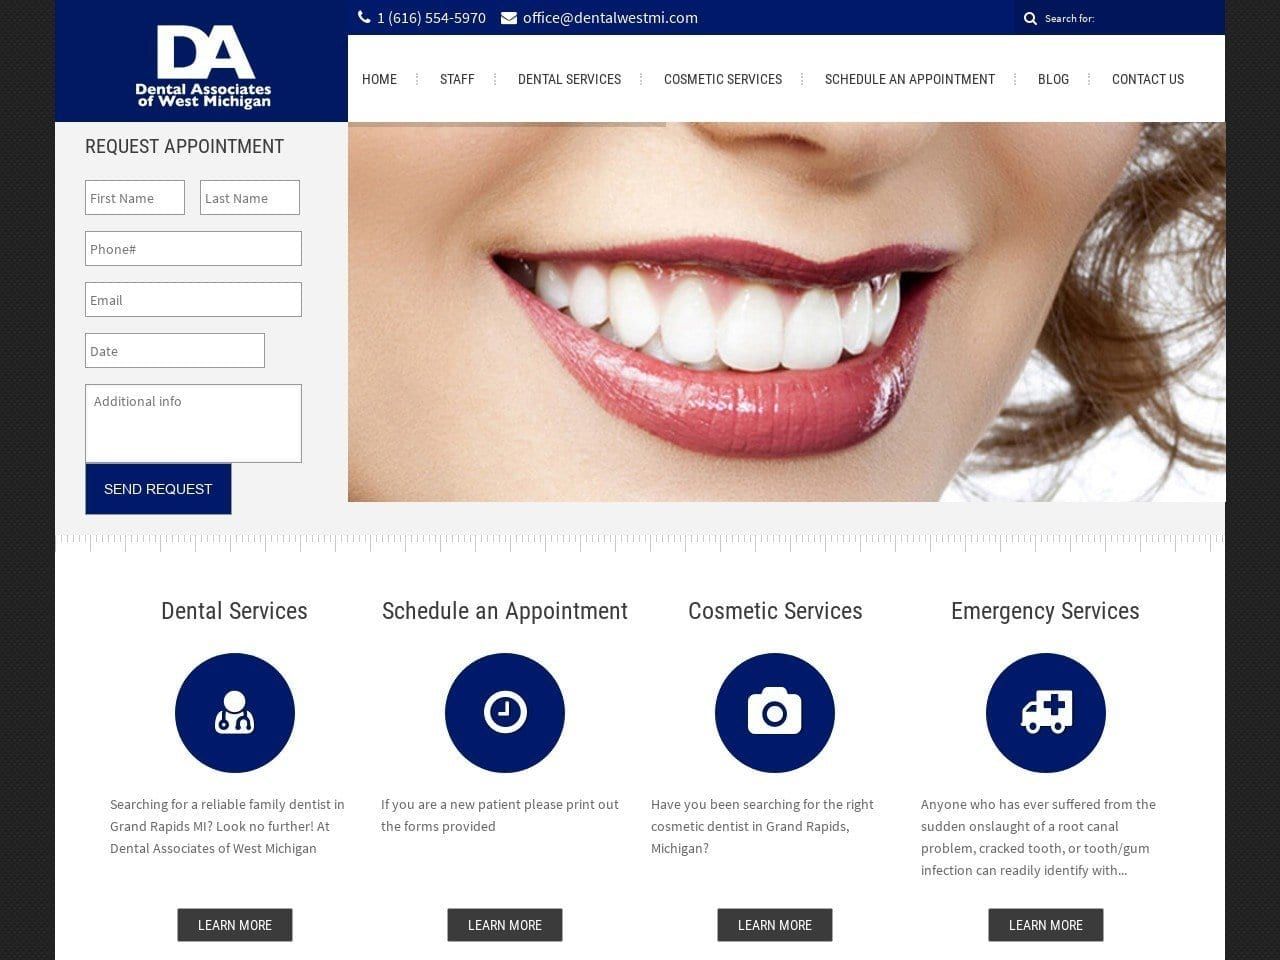 Dental Associates of West Michigan Website Screenshot from dentistwestmichigan.com